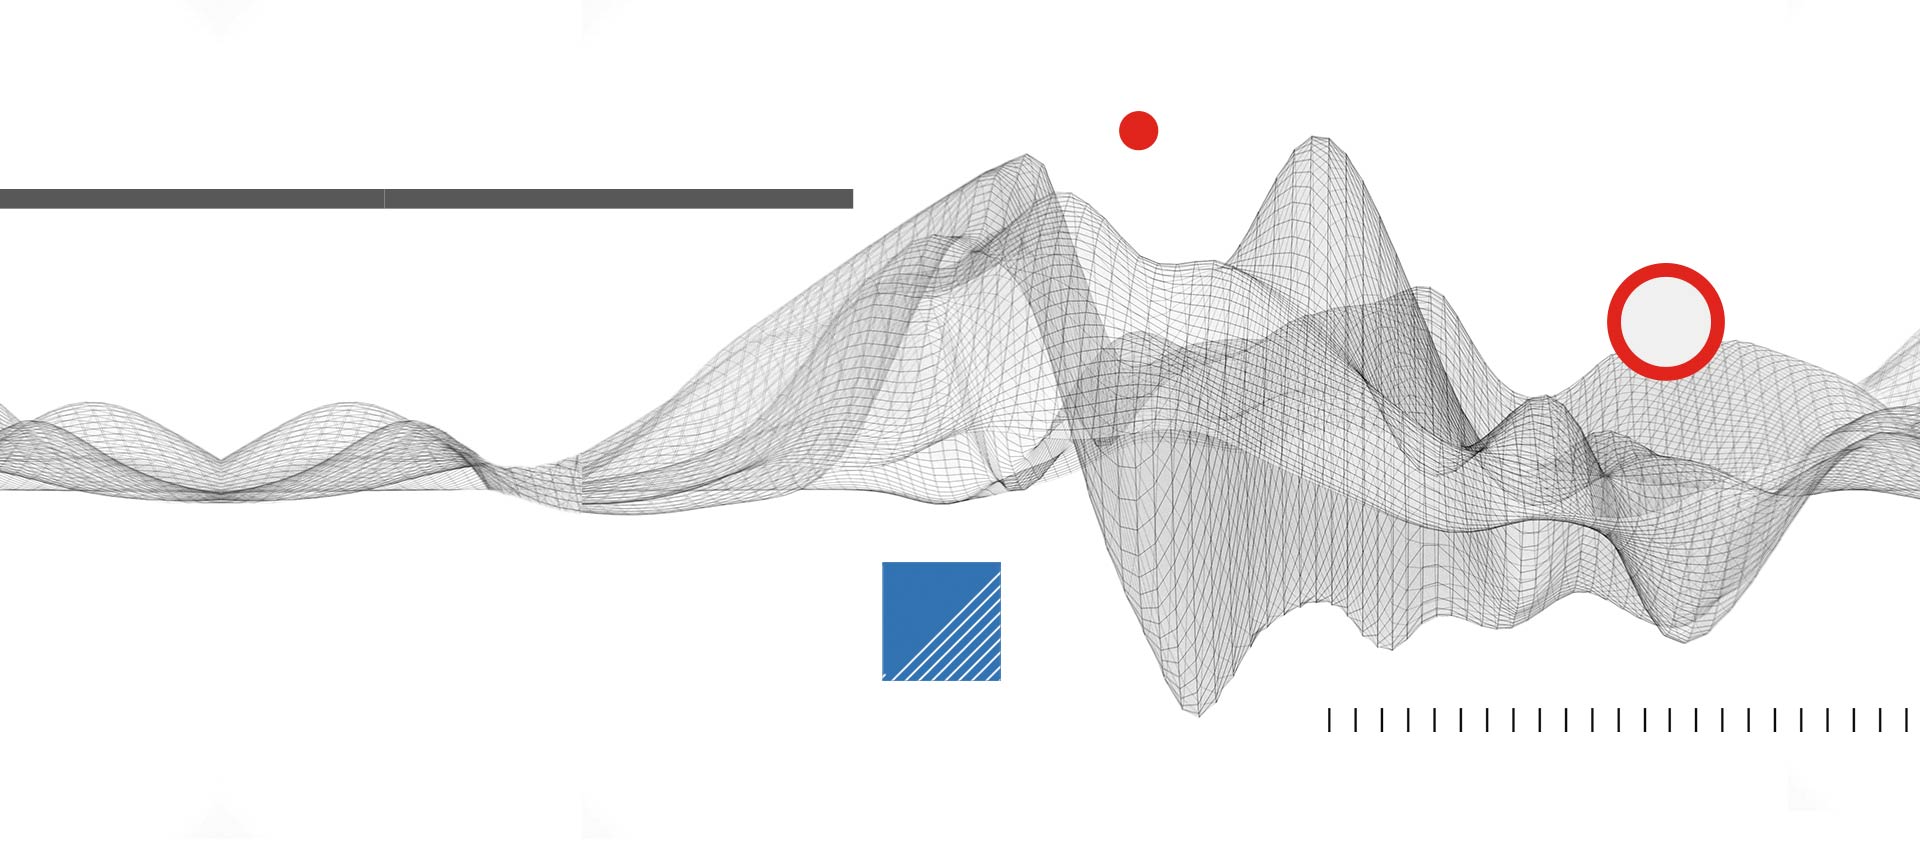 Abstract illustration representing data.